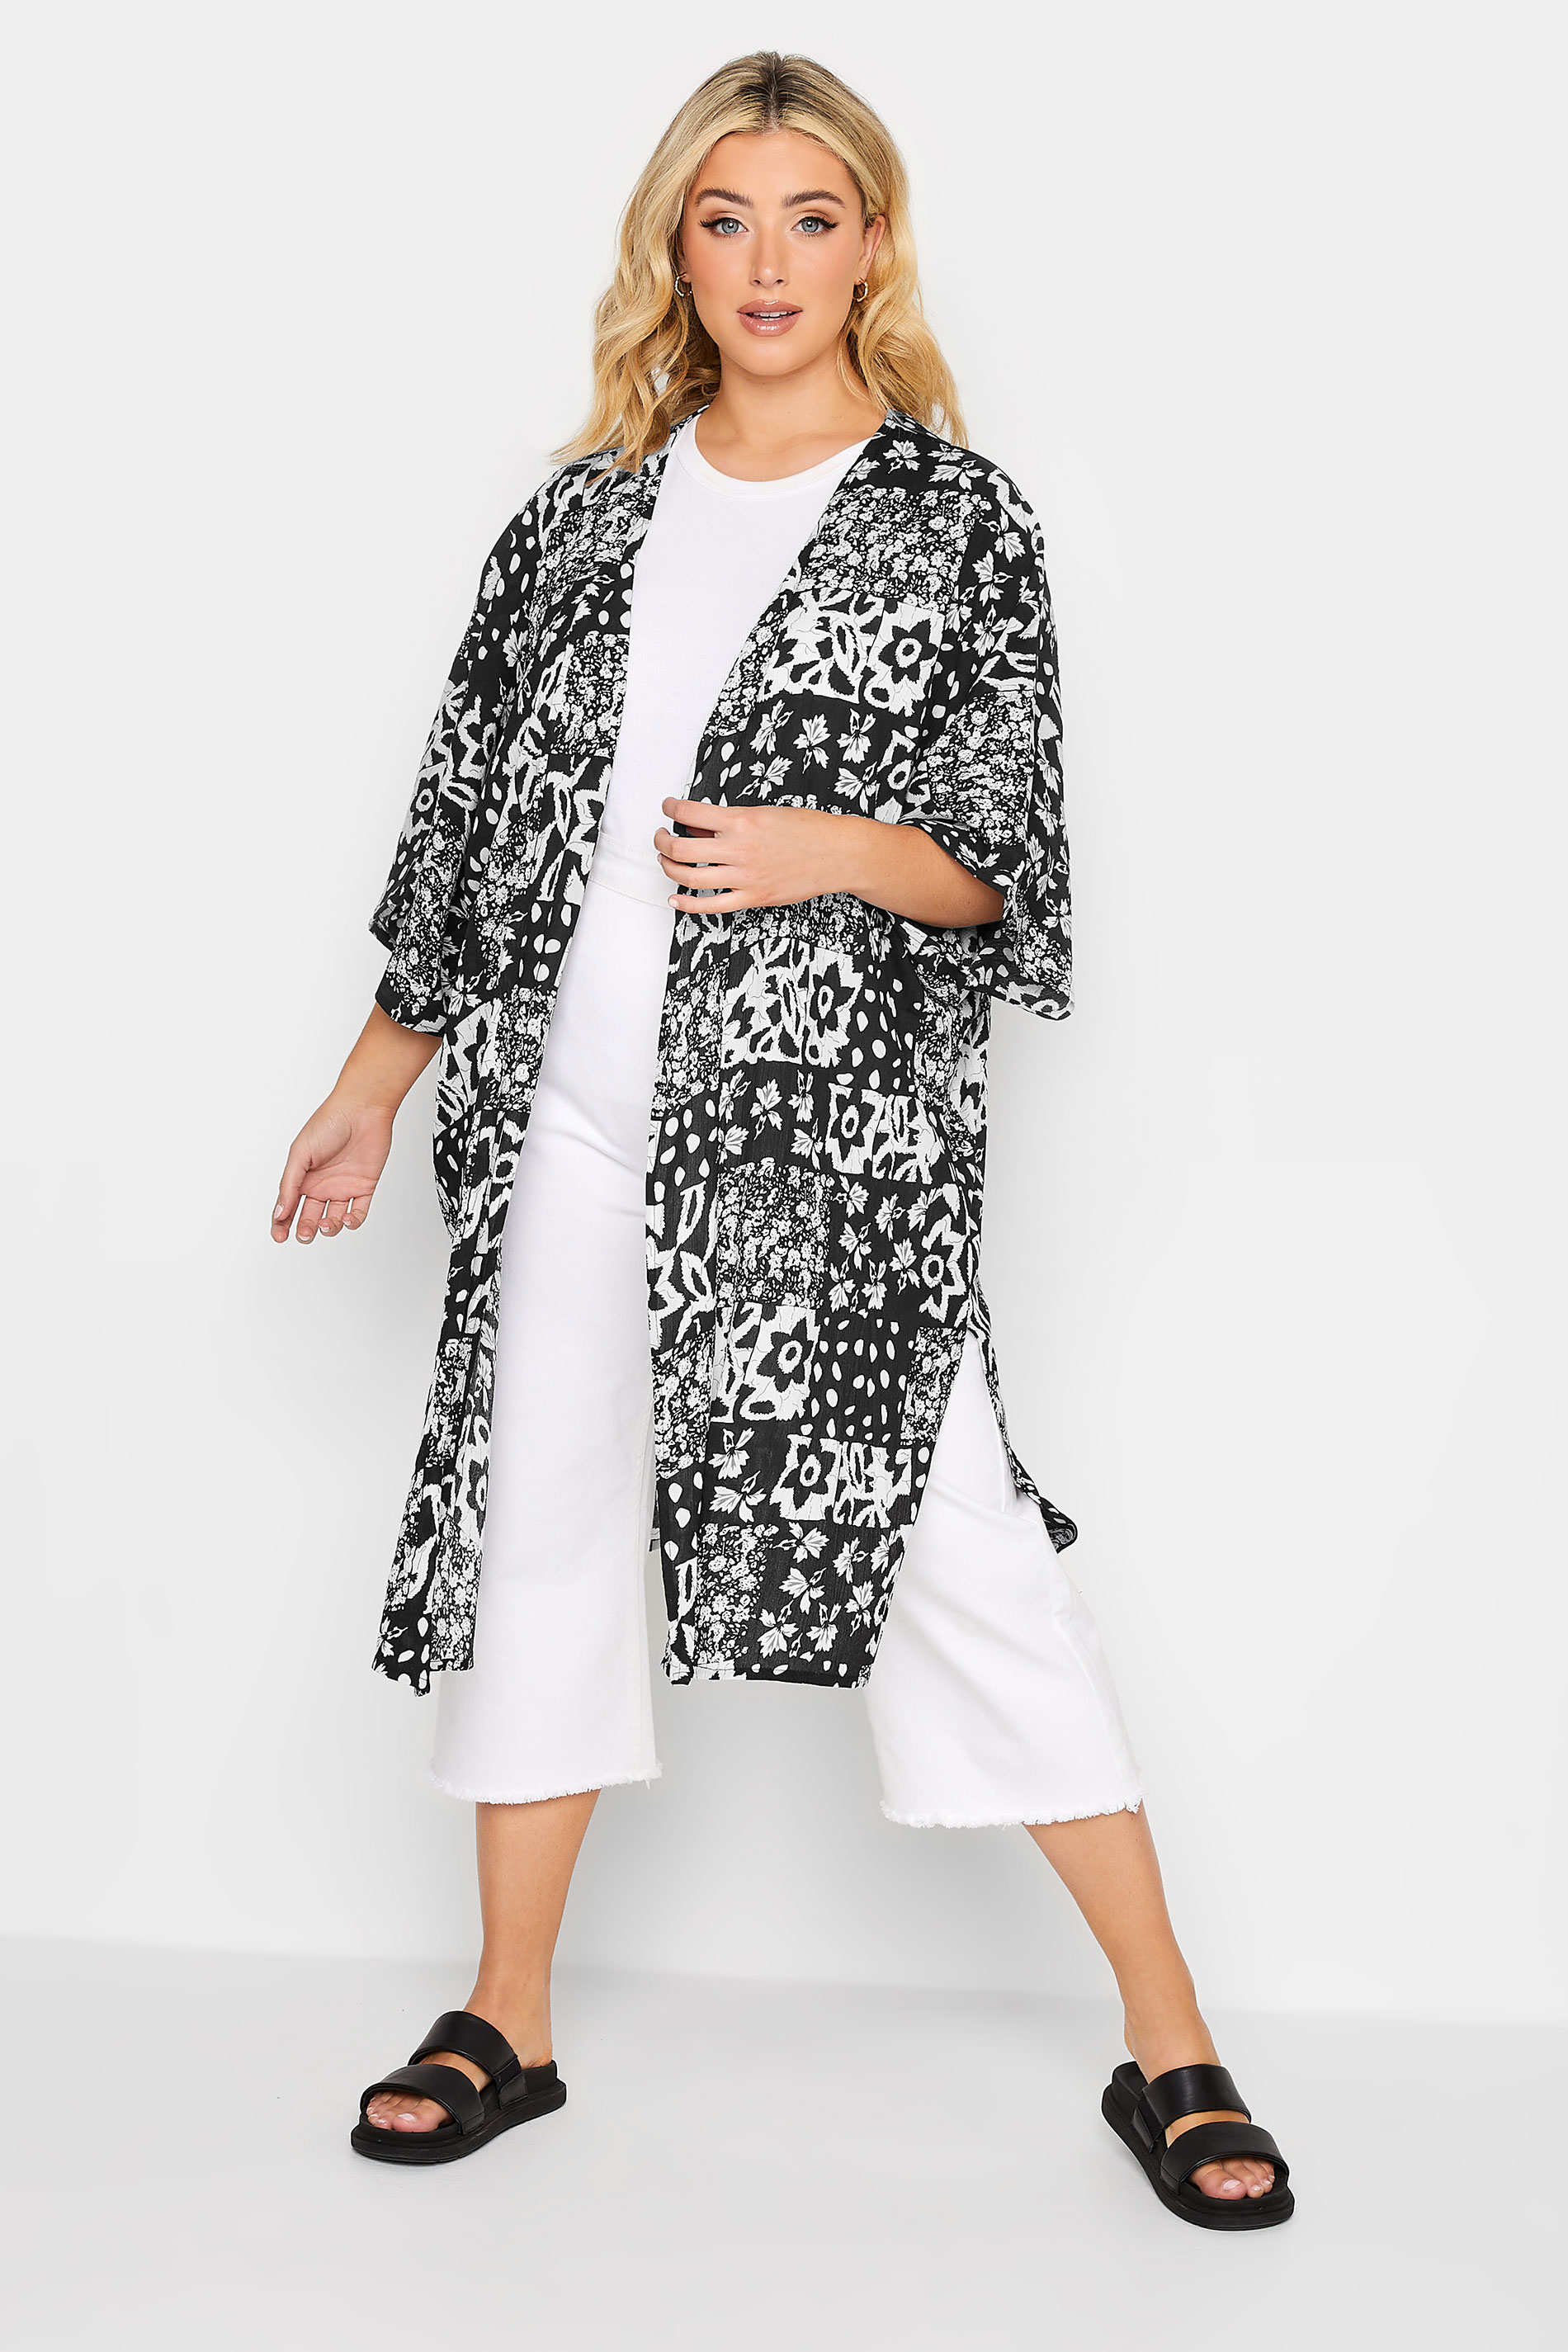 YOURS Curve Plus Size Black Tropical Print Longline Kimono | Yours Clothing  1